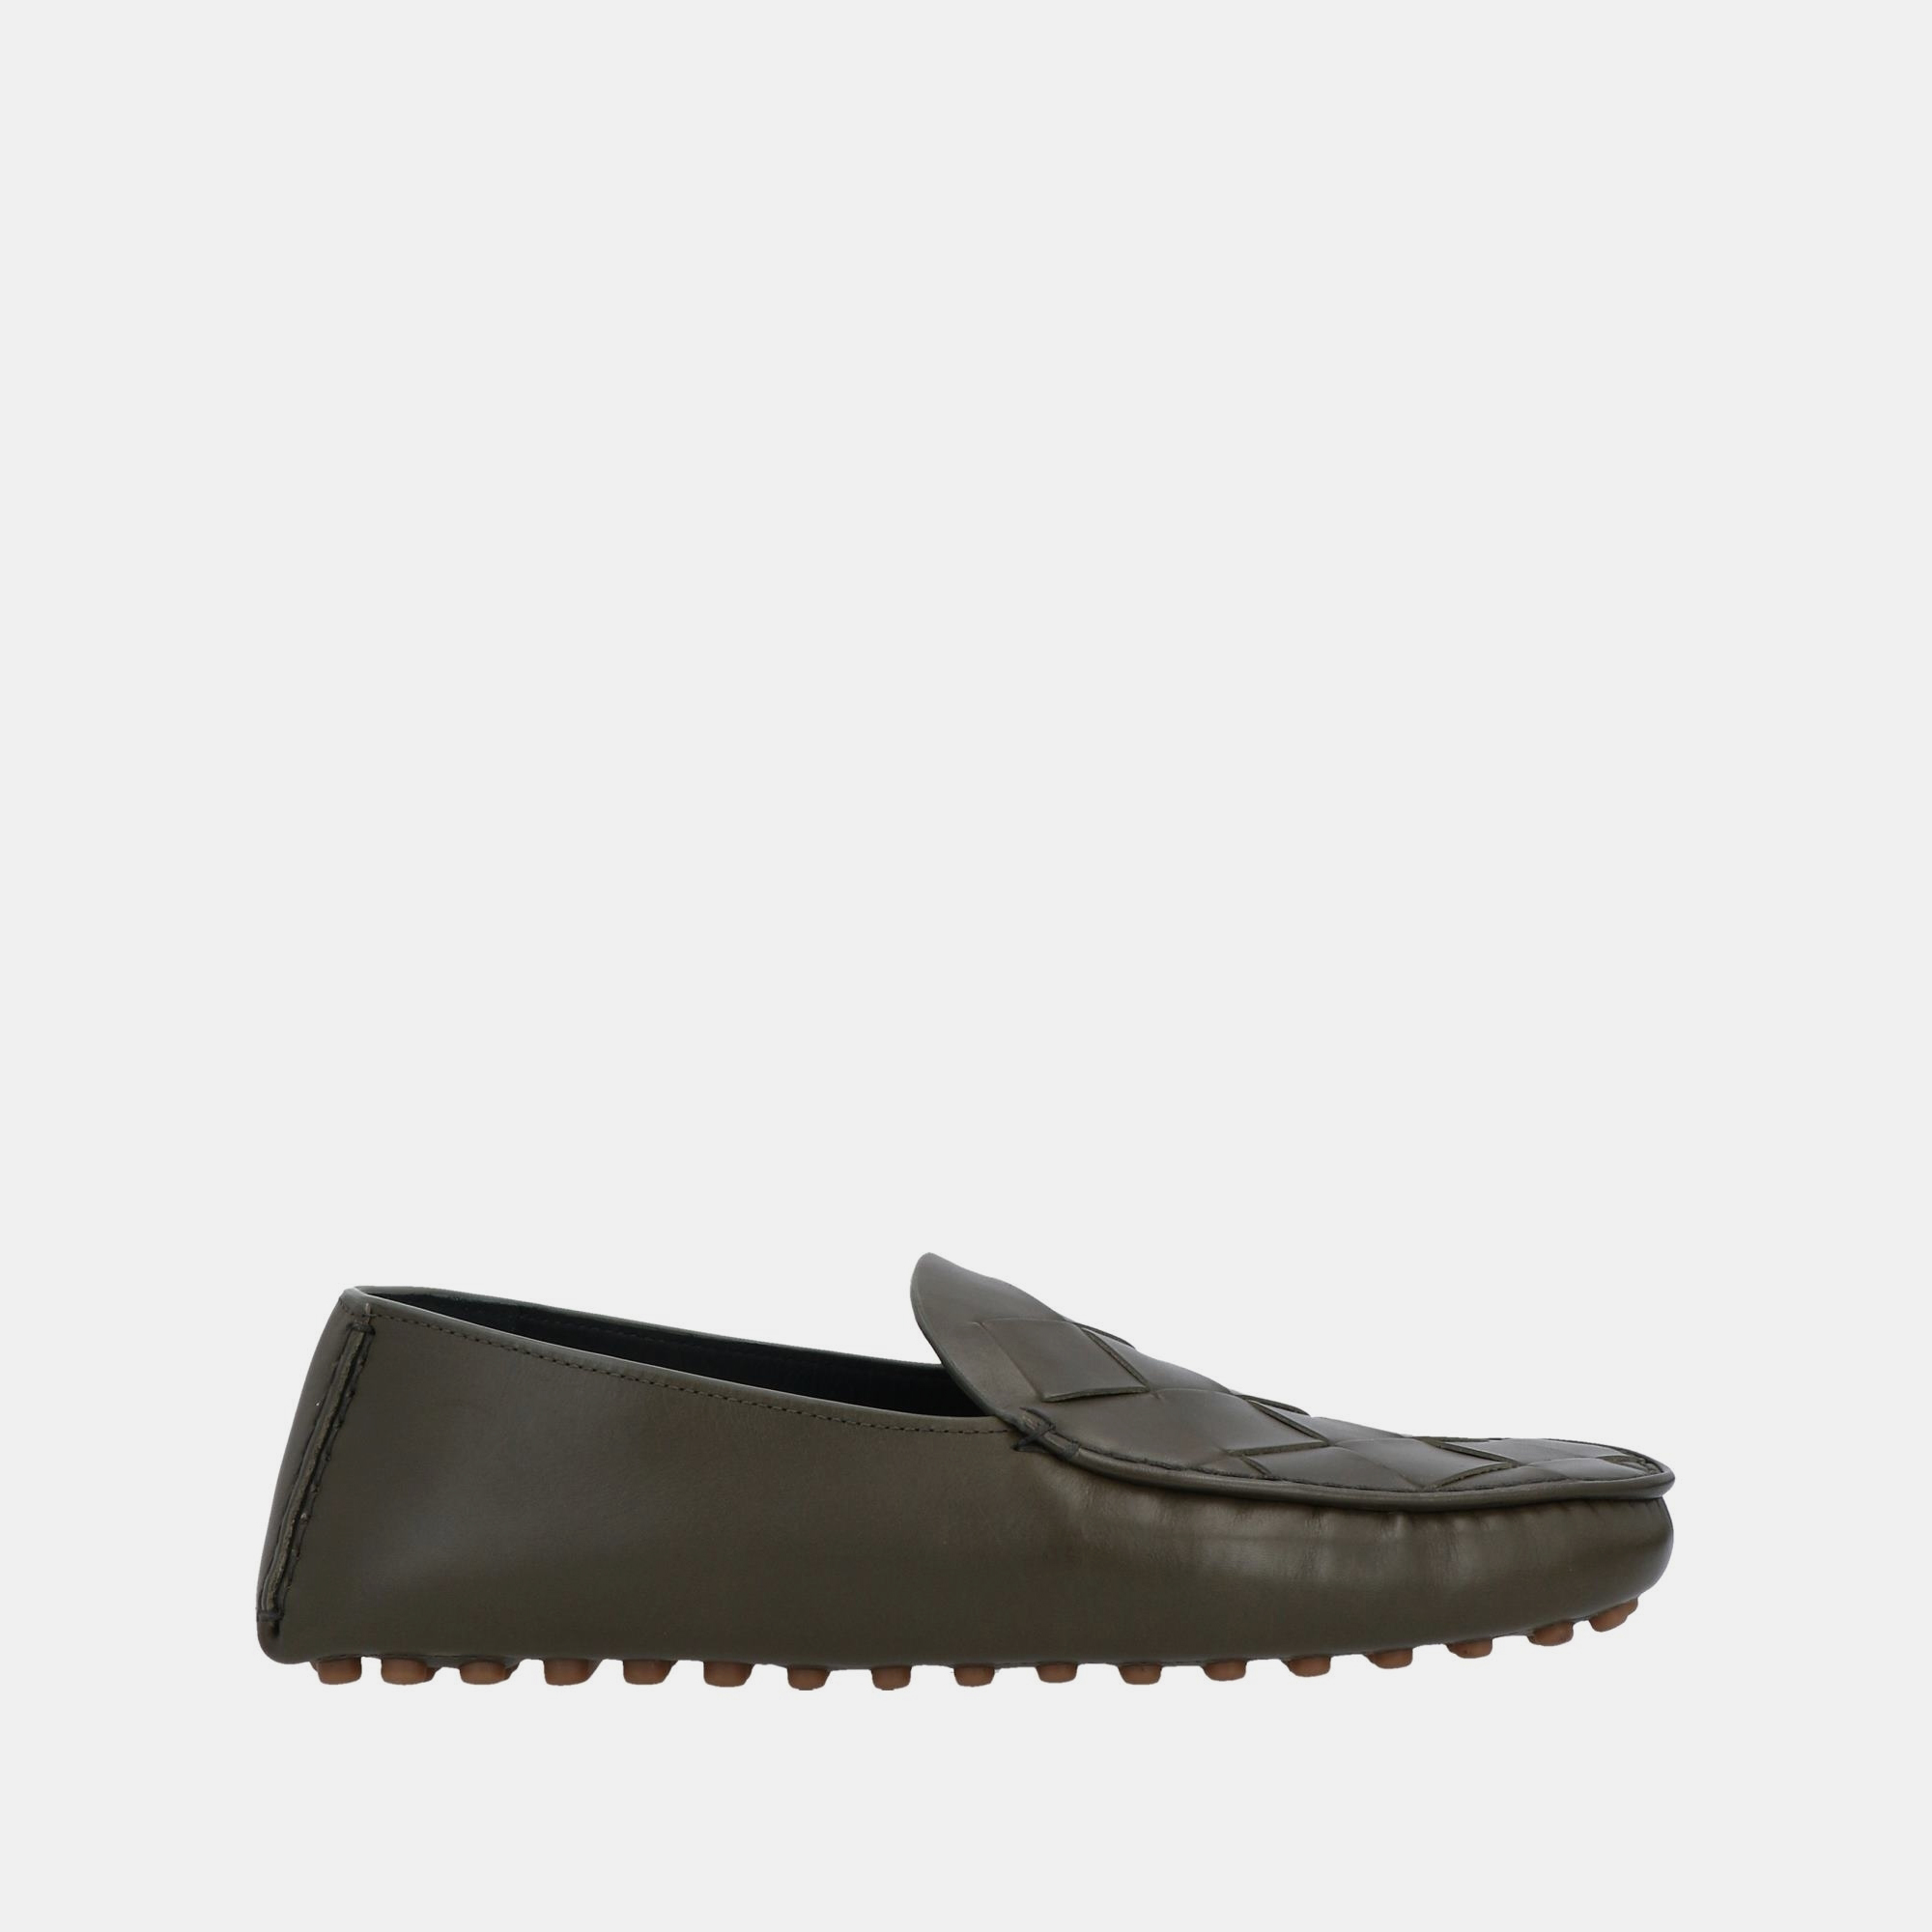 Bottega veneta leather slip on loafers size 41